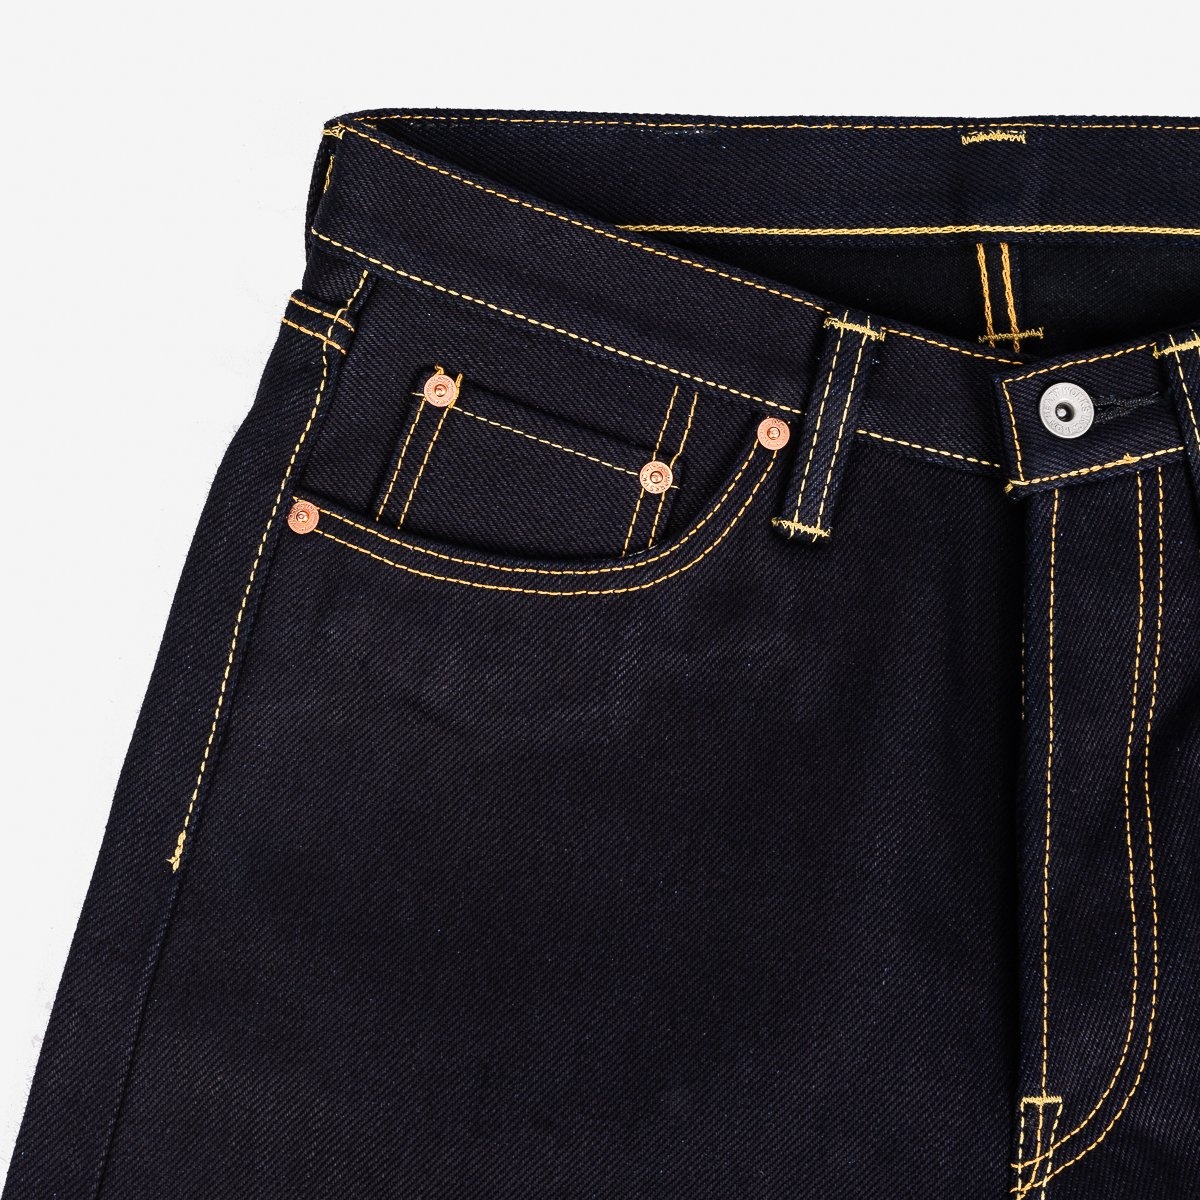 IH-888-XHSib 25oz Selvedge Denim Medium/High Rise Tapered Cut Jeans - Indigo/Black - 6